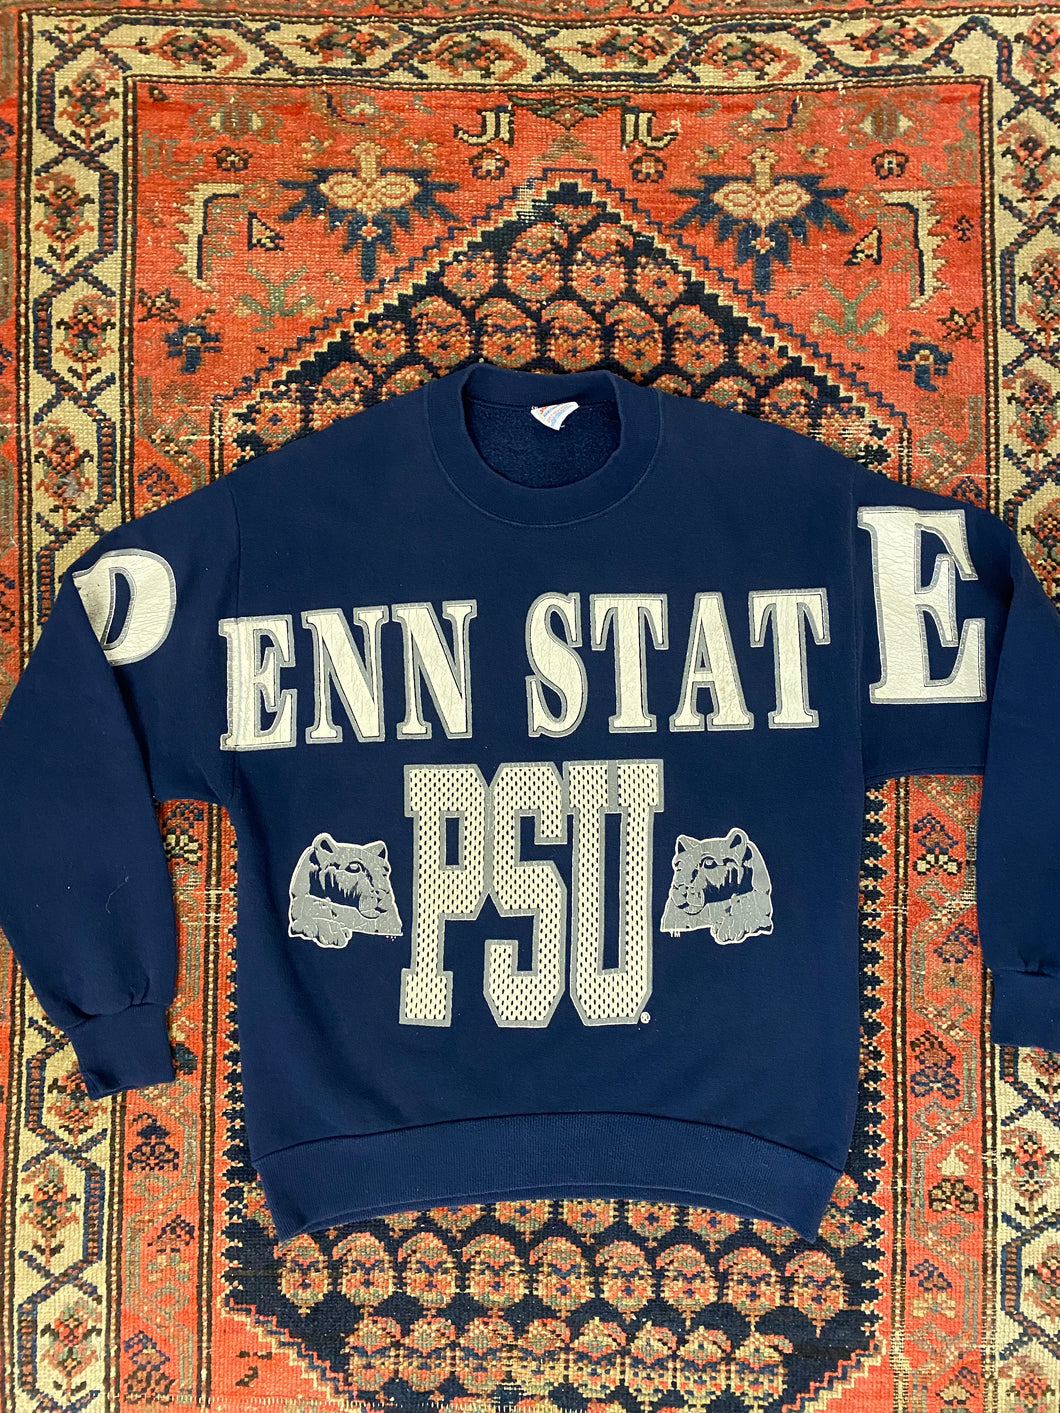 90s Penn State Crewneck - S